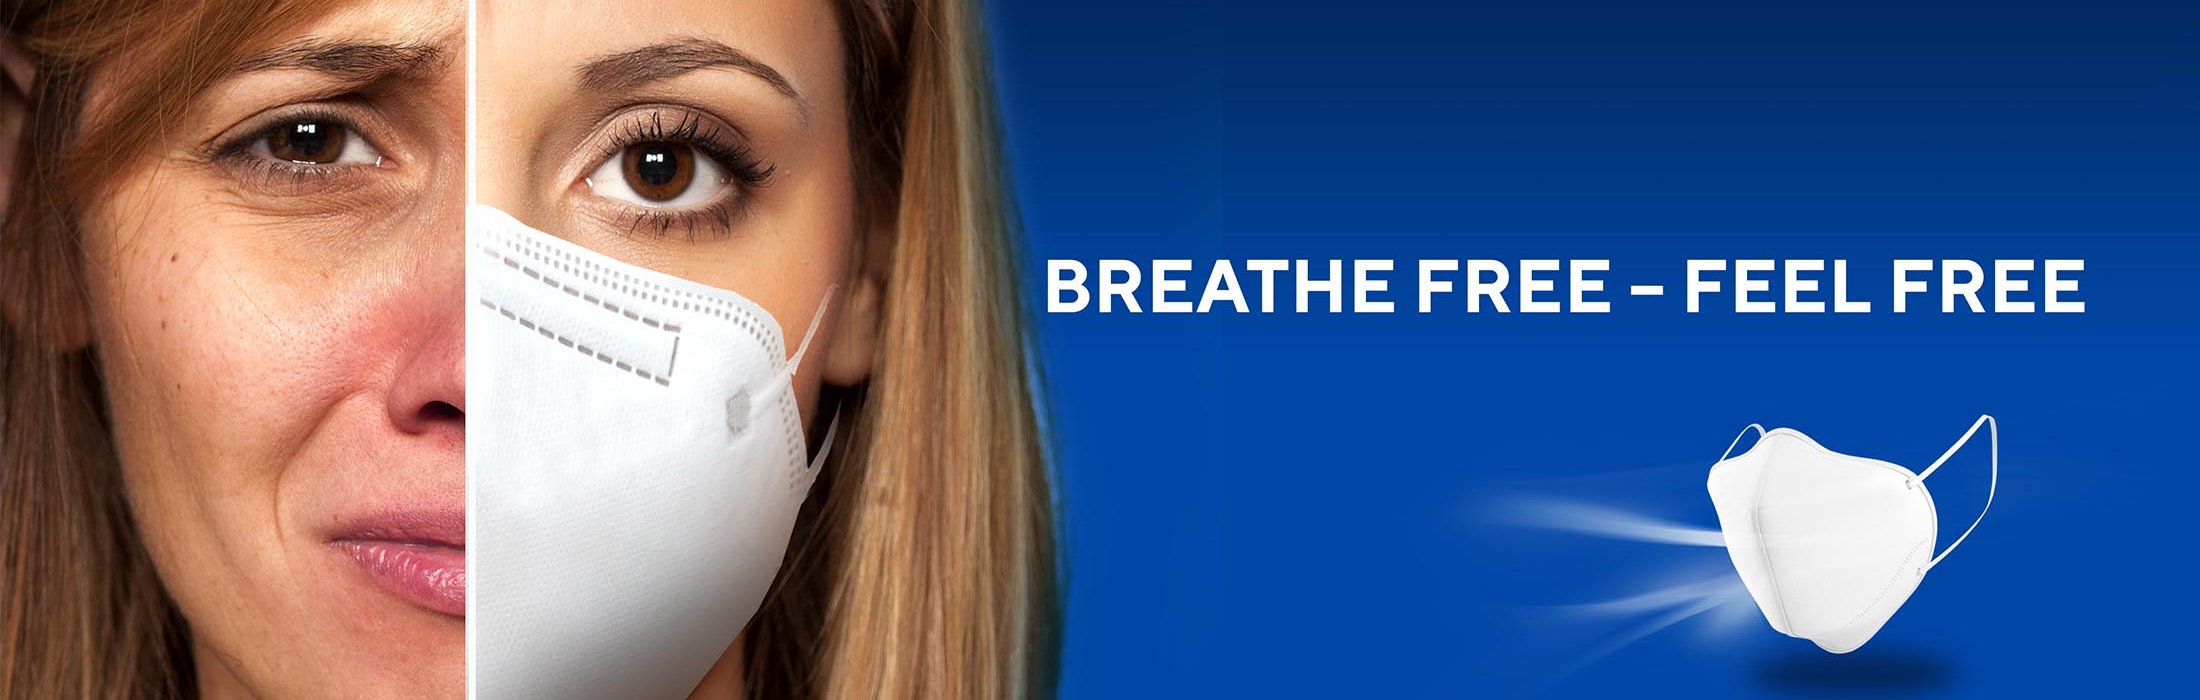 respirator mask for pollen protection